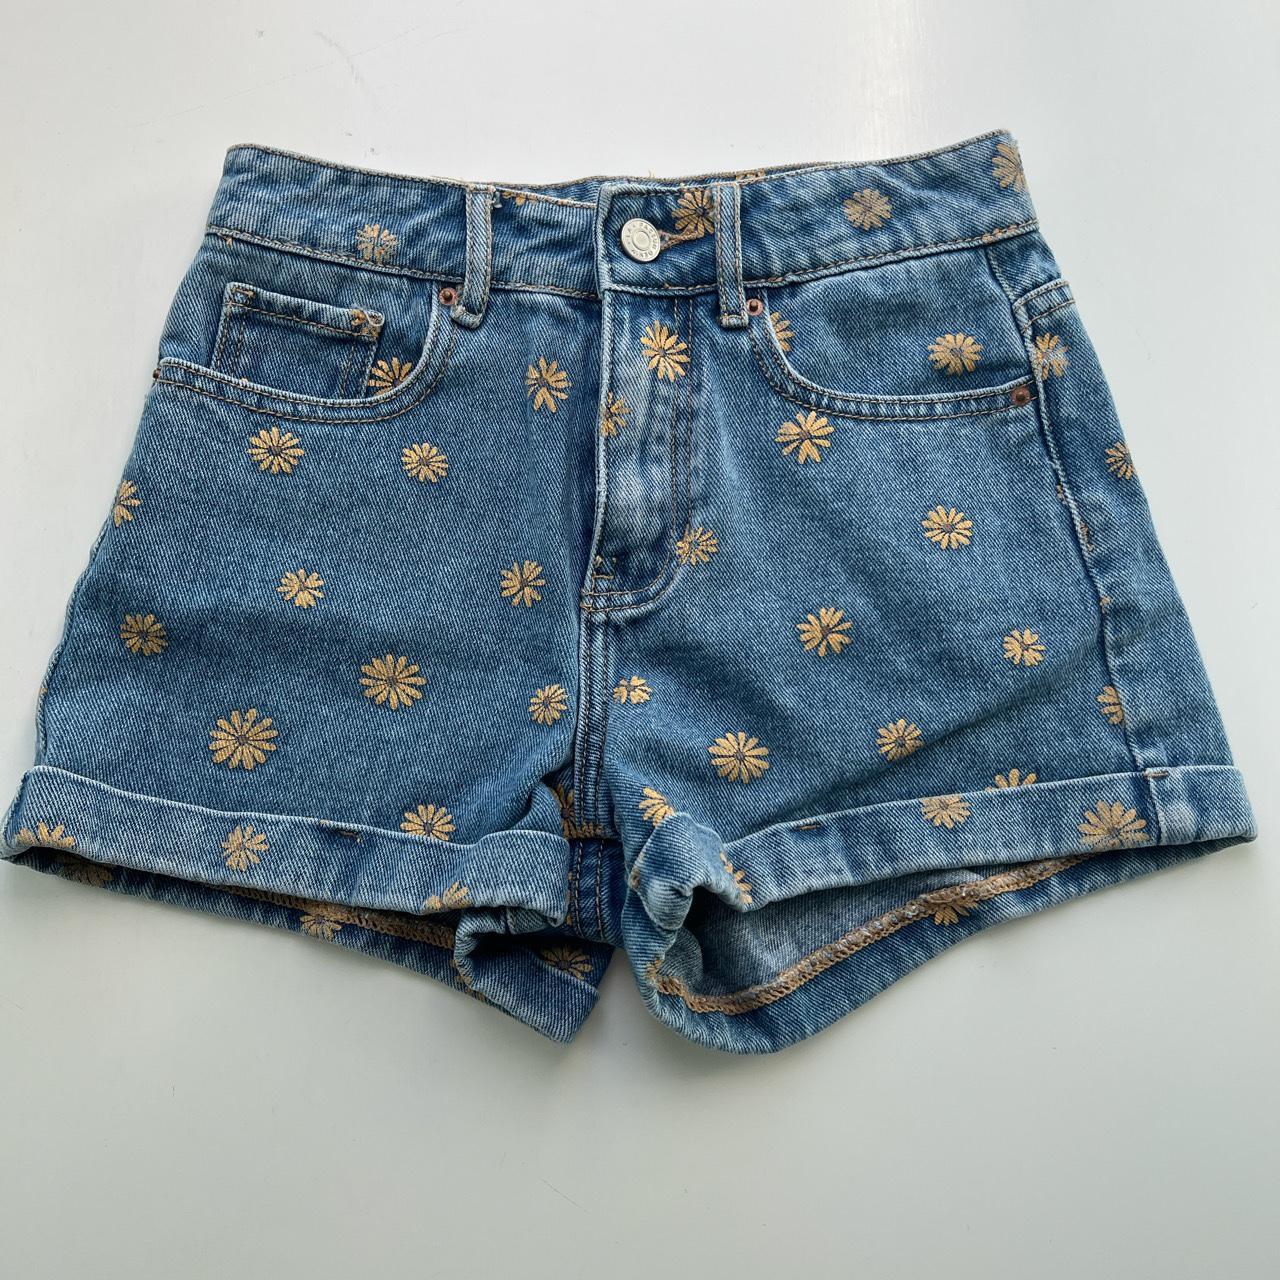 Pacsun Retro Sunflower Jean Shorts Size 23 - Depop